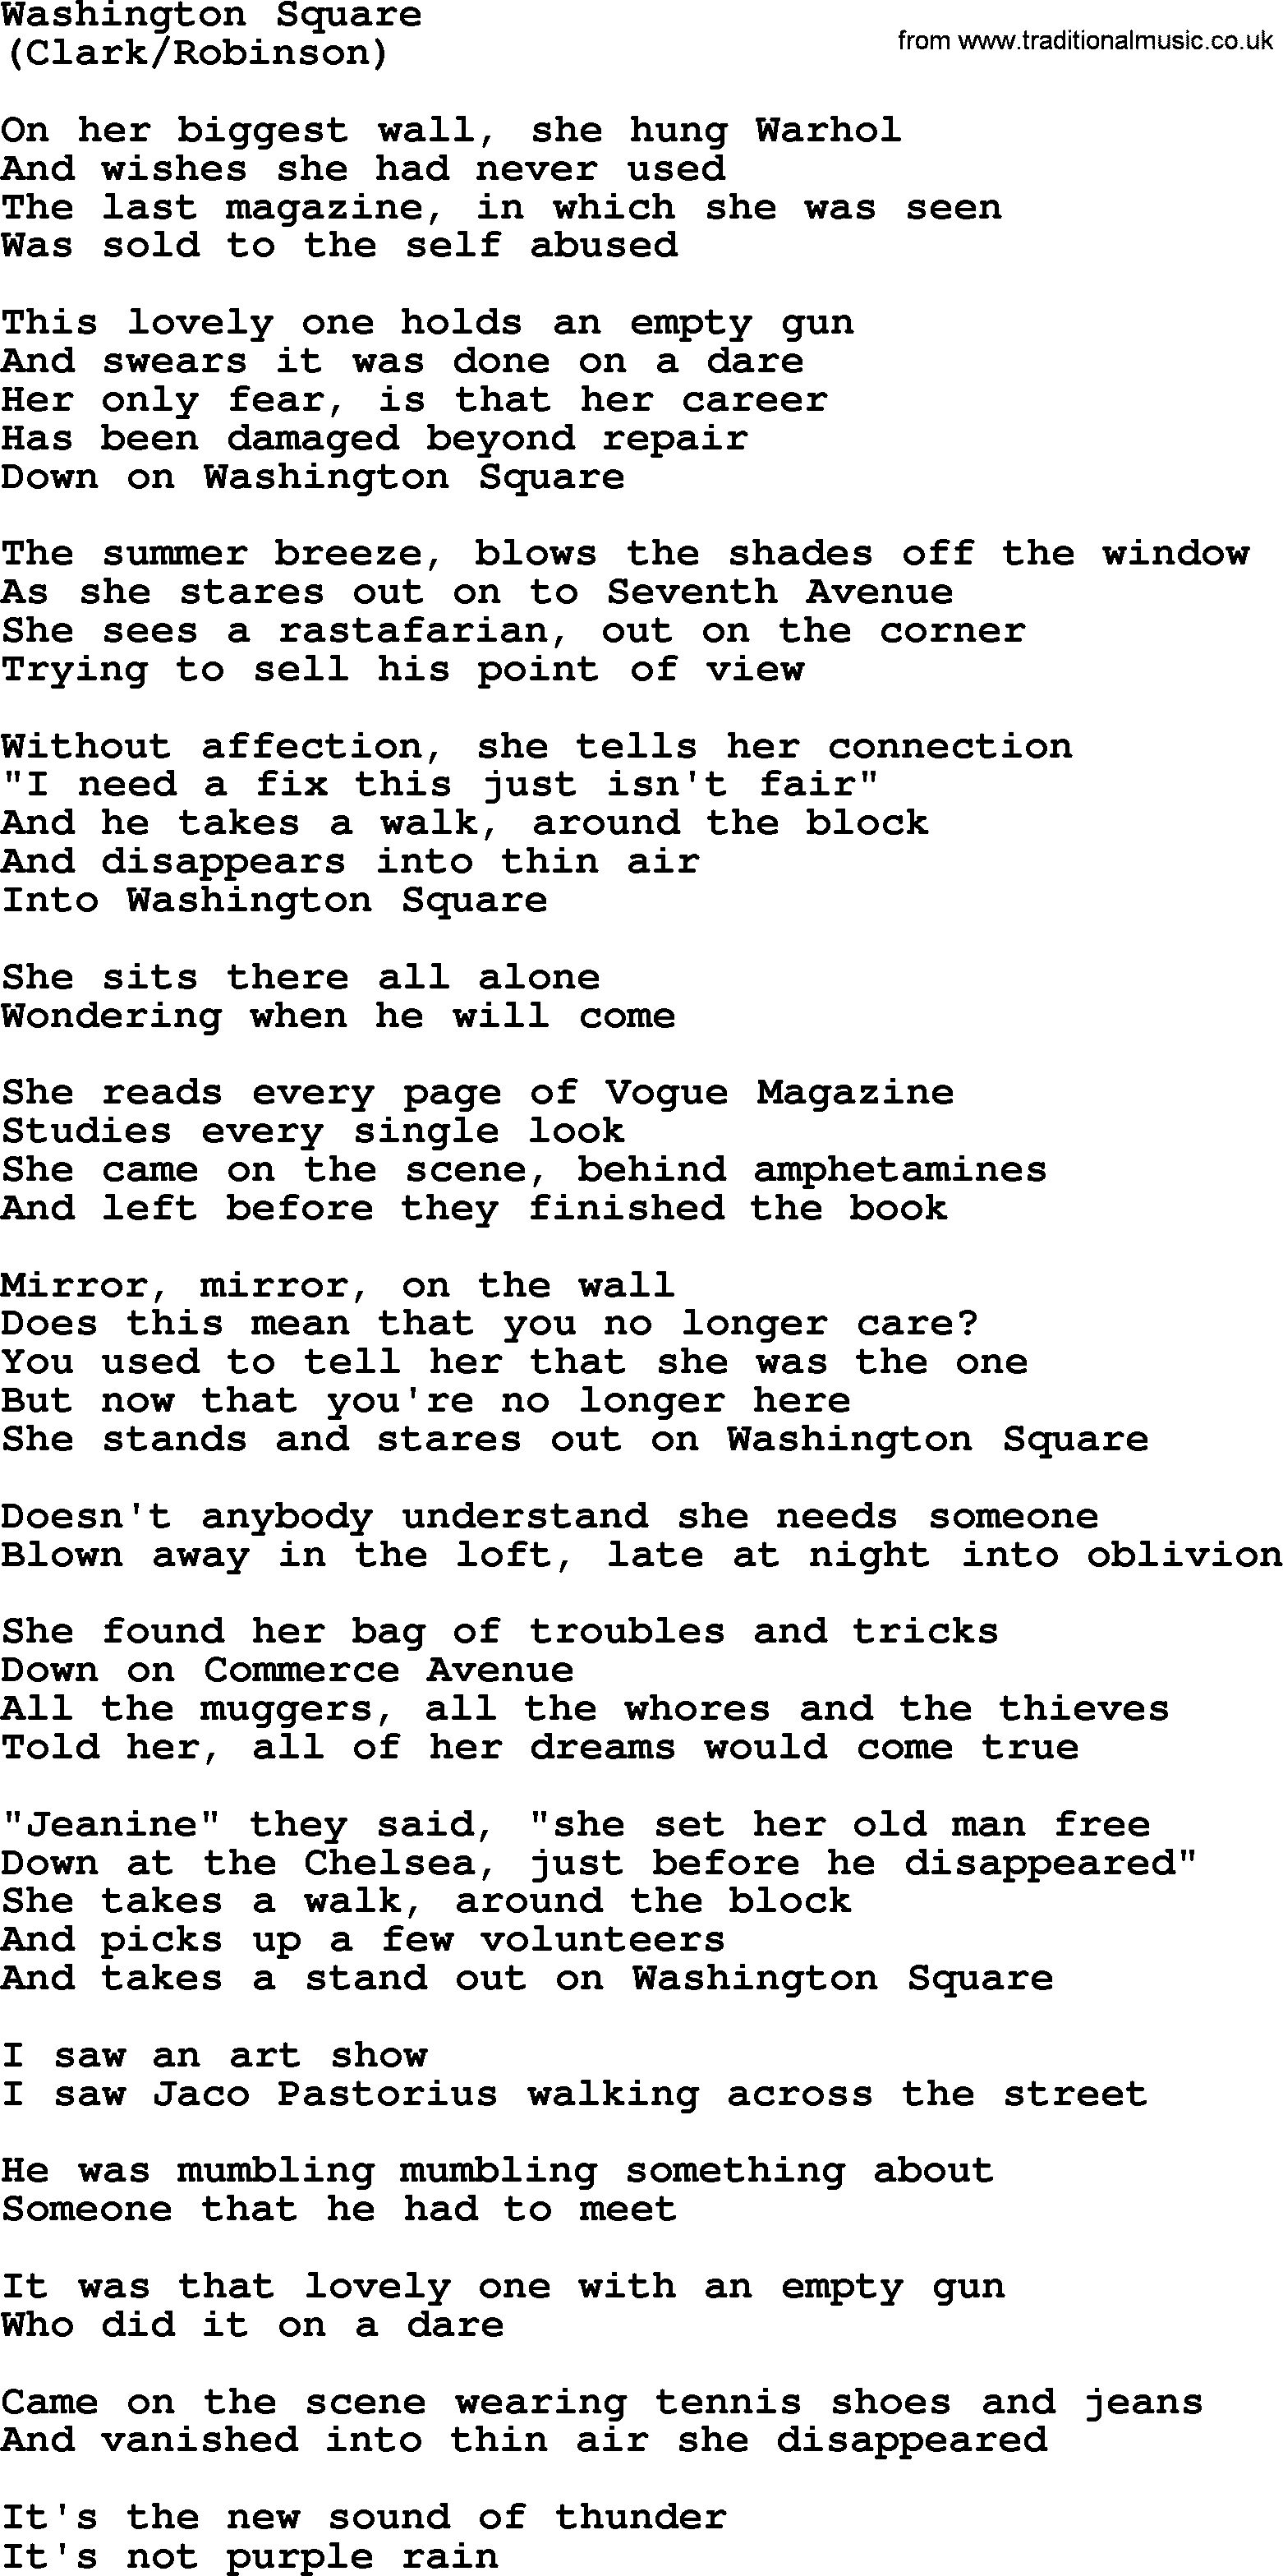 The Byrds song Washington Square, lyrics